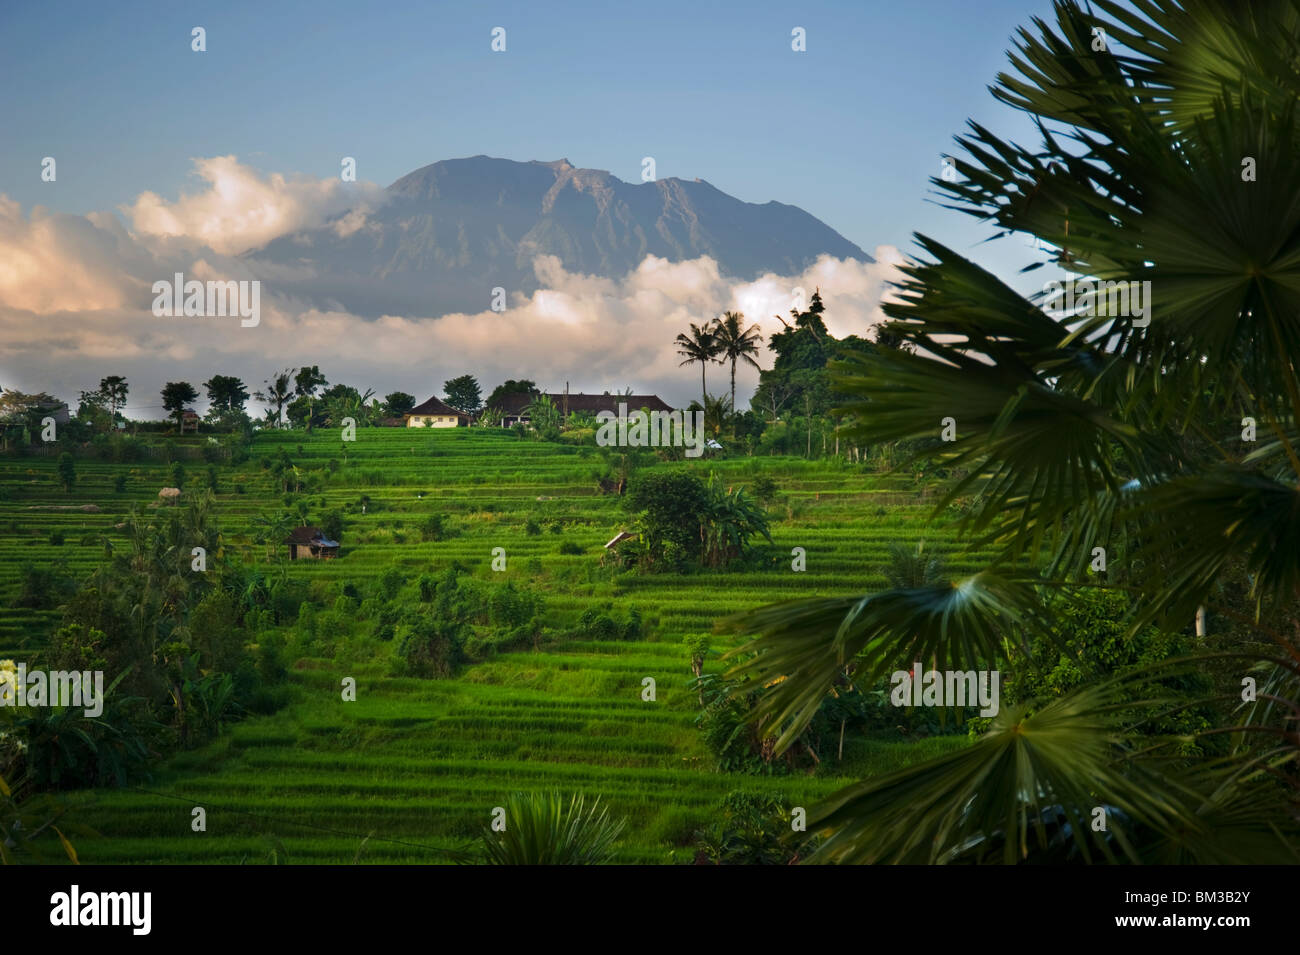 Gunung Agung vulcano, Bali Indonesia with sawa's in foreground Stock Photo